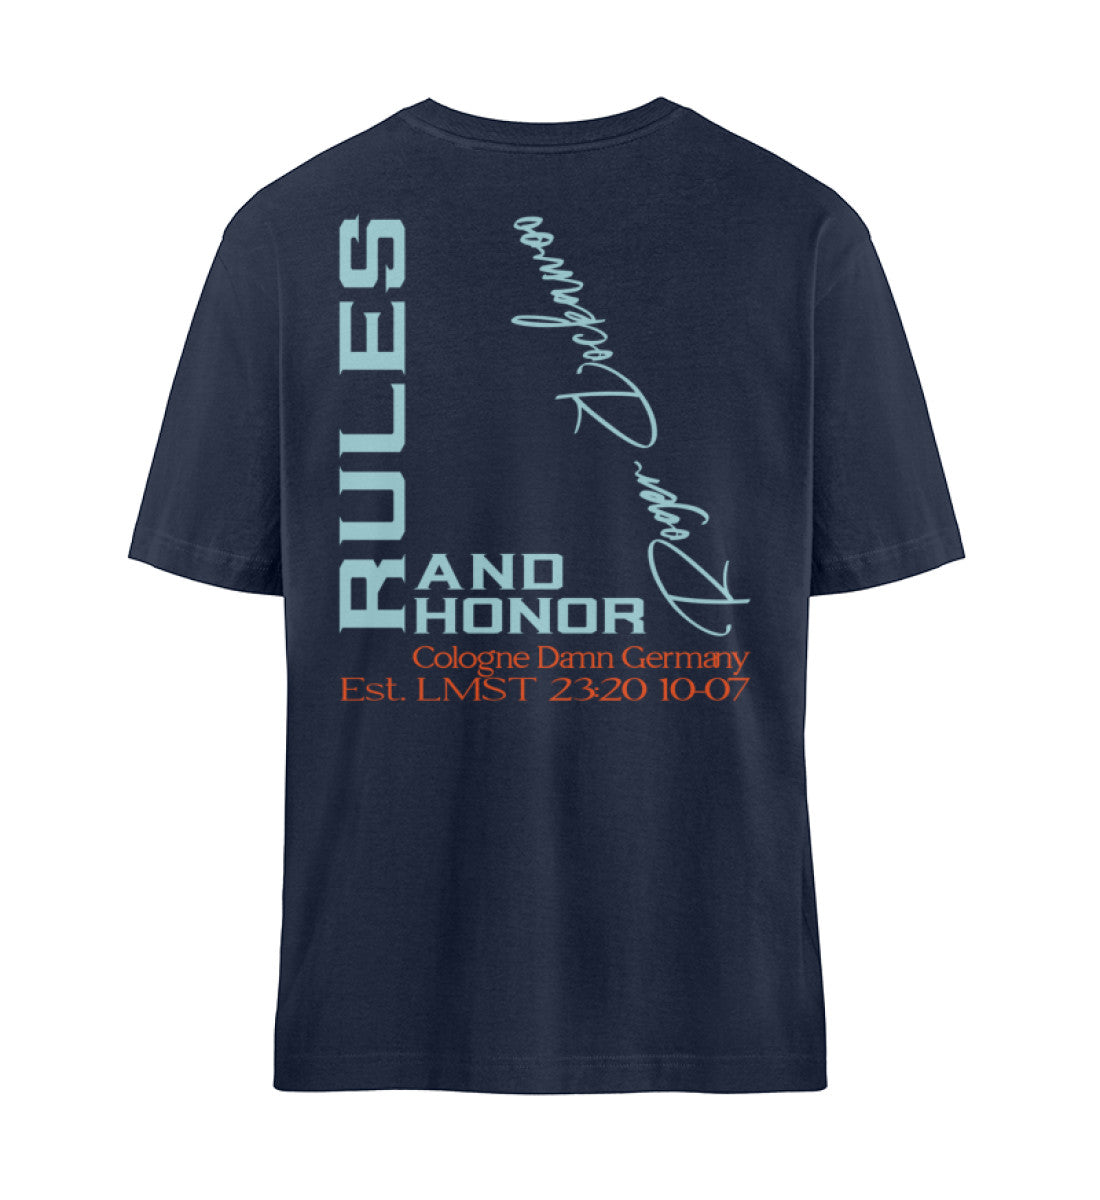 French Navy Blue T-Shirt Damen Herren Unisex mit Print Design der Boxing Rules and Honor Kollektion von Roger Rockawoo Clothing